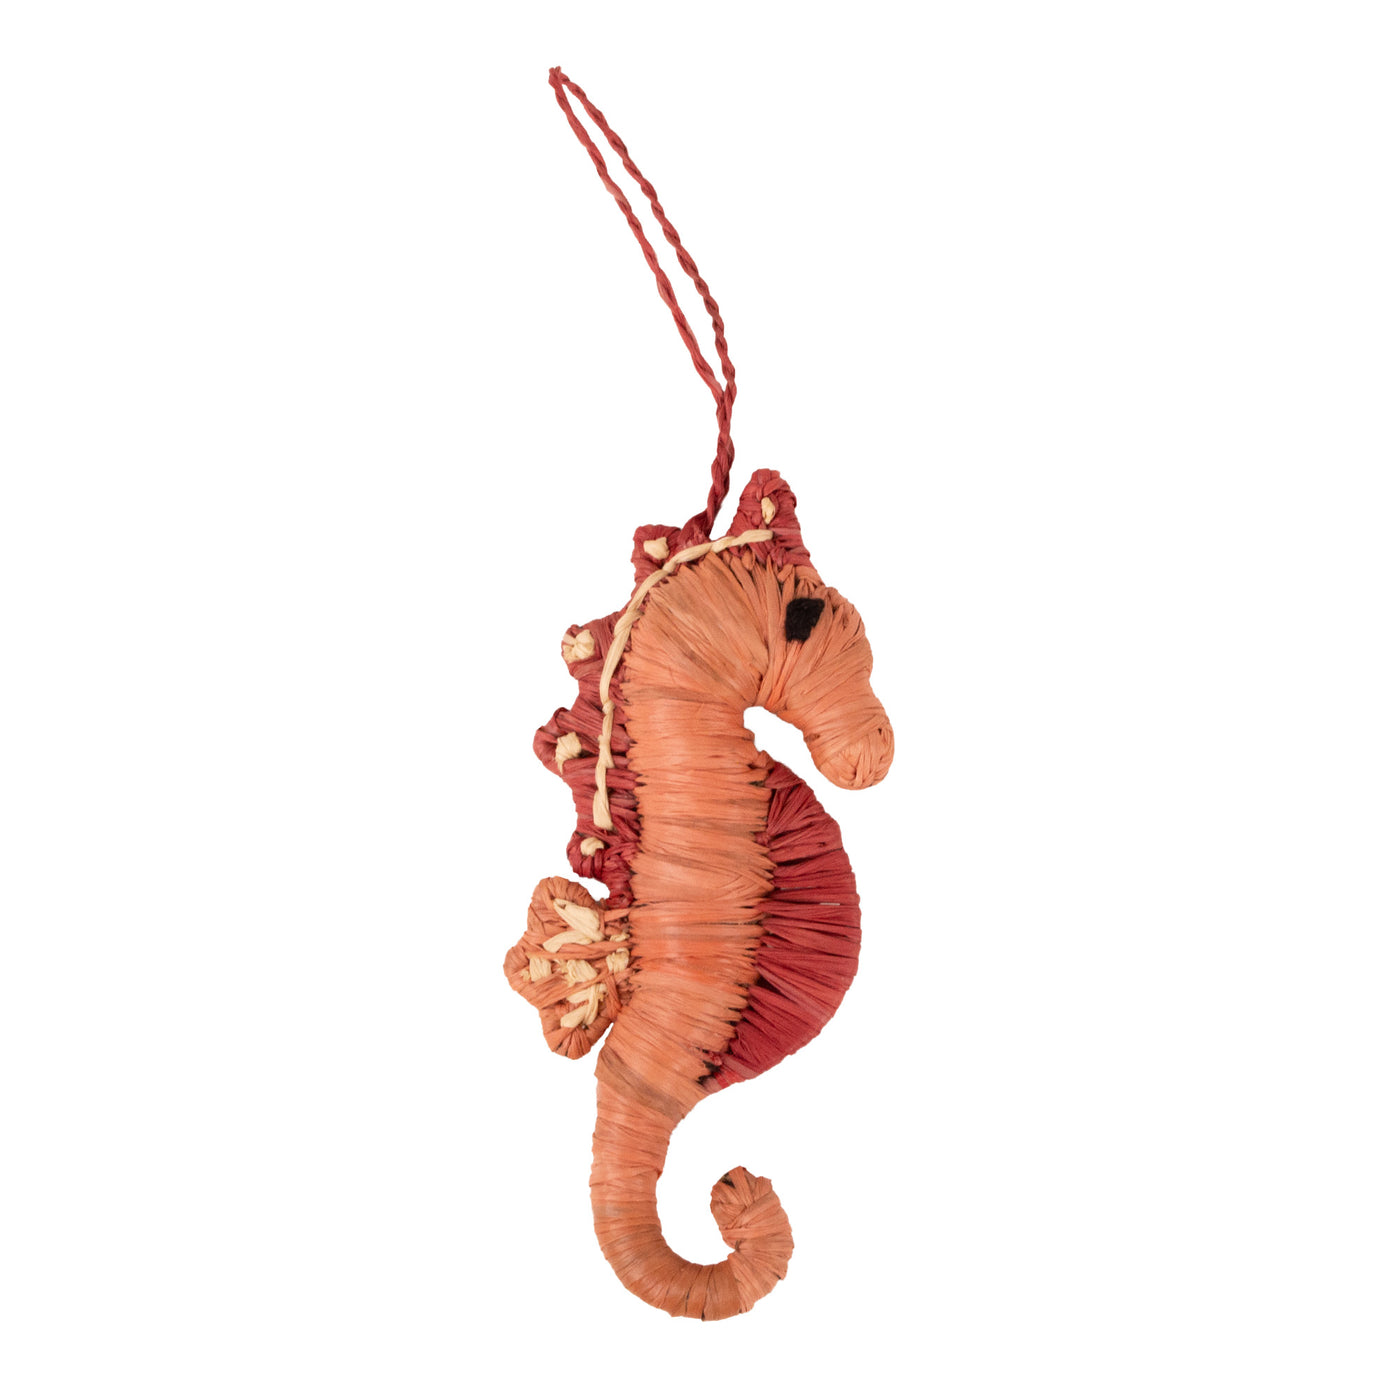 Coastal Ornament - Peach Seahorse